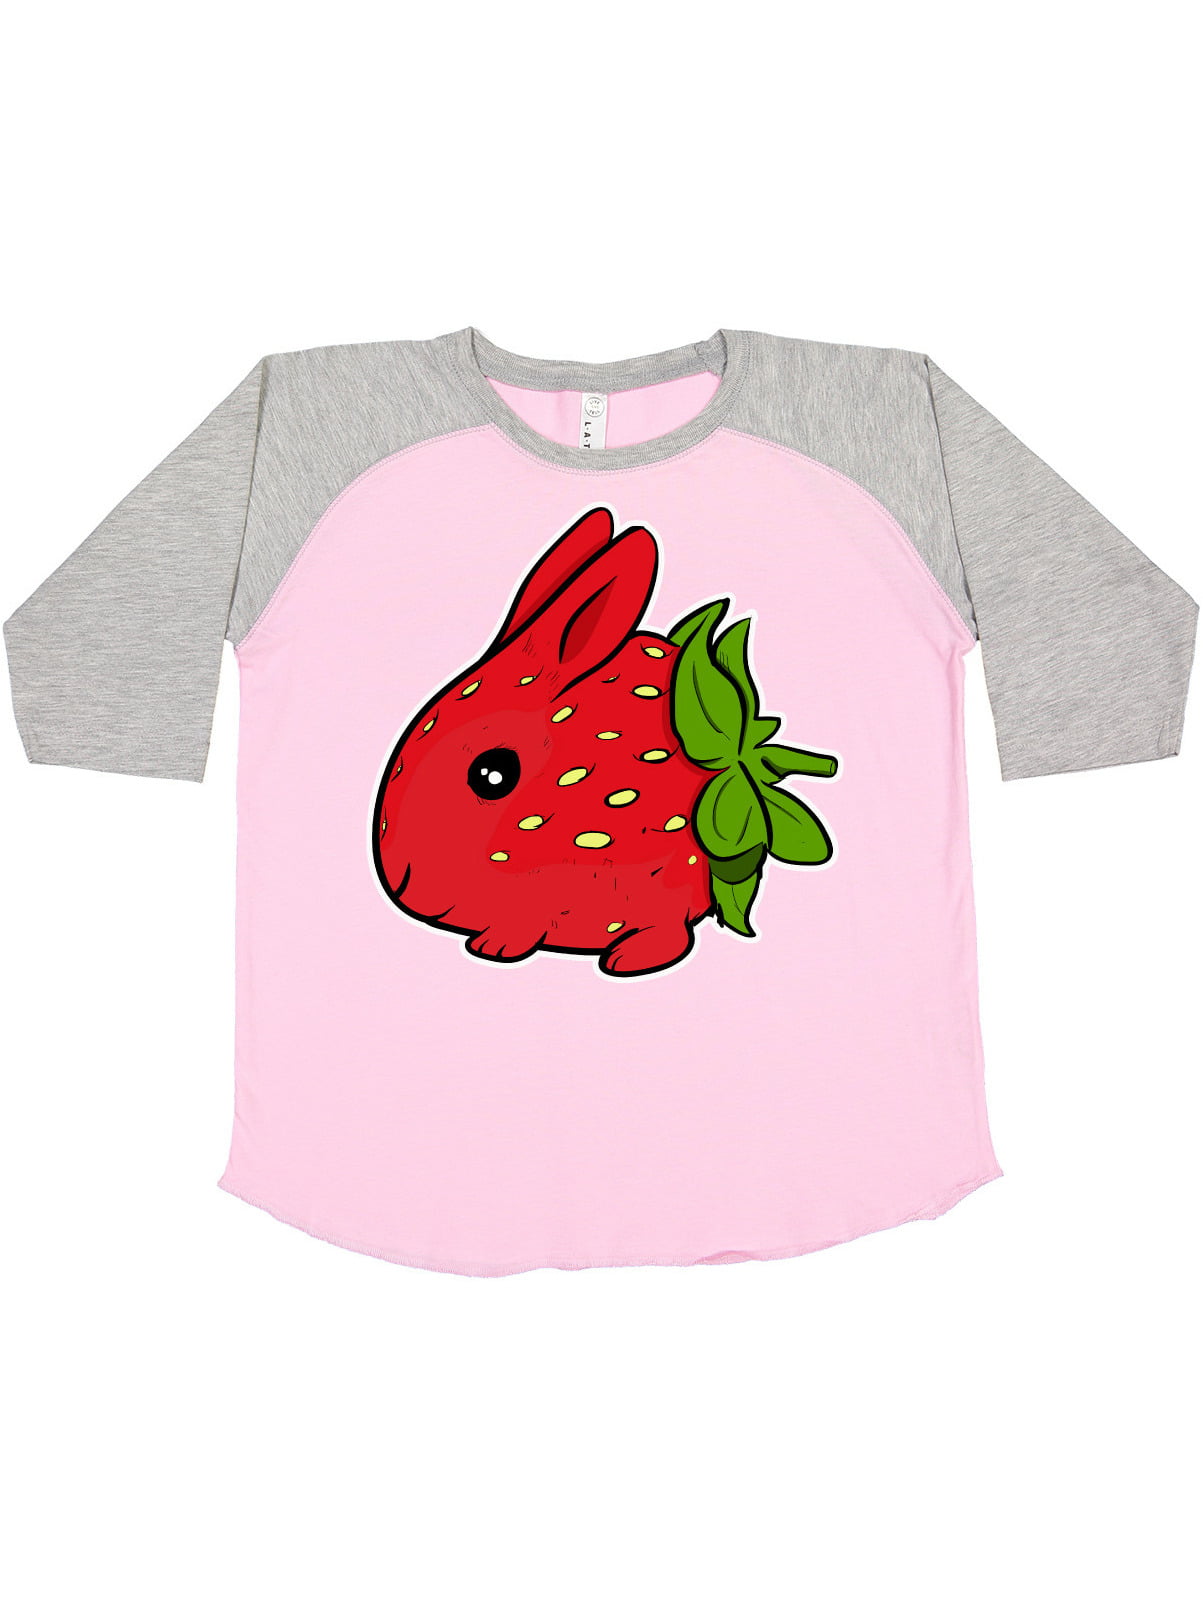 Bunny Nerd Kid's T-Shirt Children Boys Girls Unisex Top Rabbit 